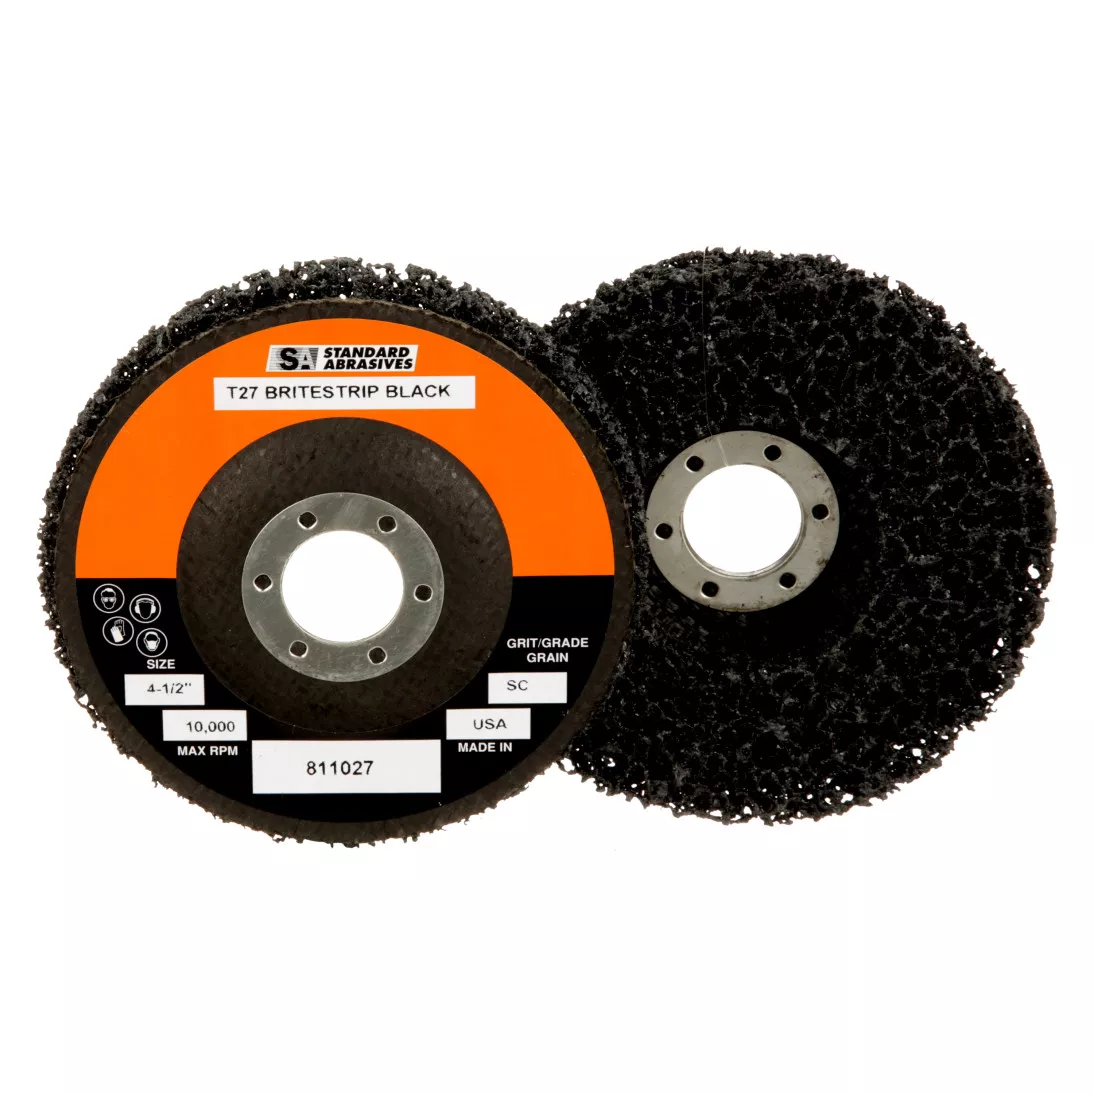 Standard Abrasives™ Type 27 Cleaning Disc 811027, 4-1/2 in x 1/2 in x
7/8 in, 5 per inner 50 per case